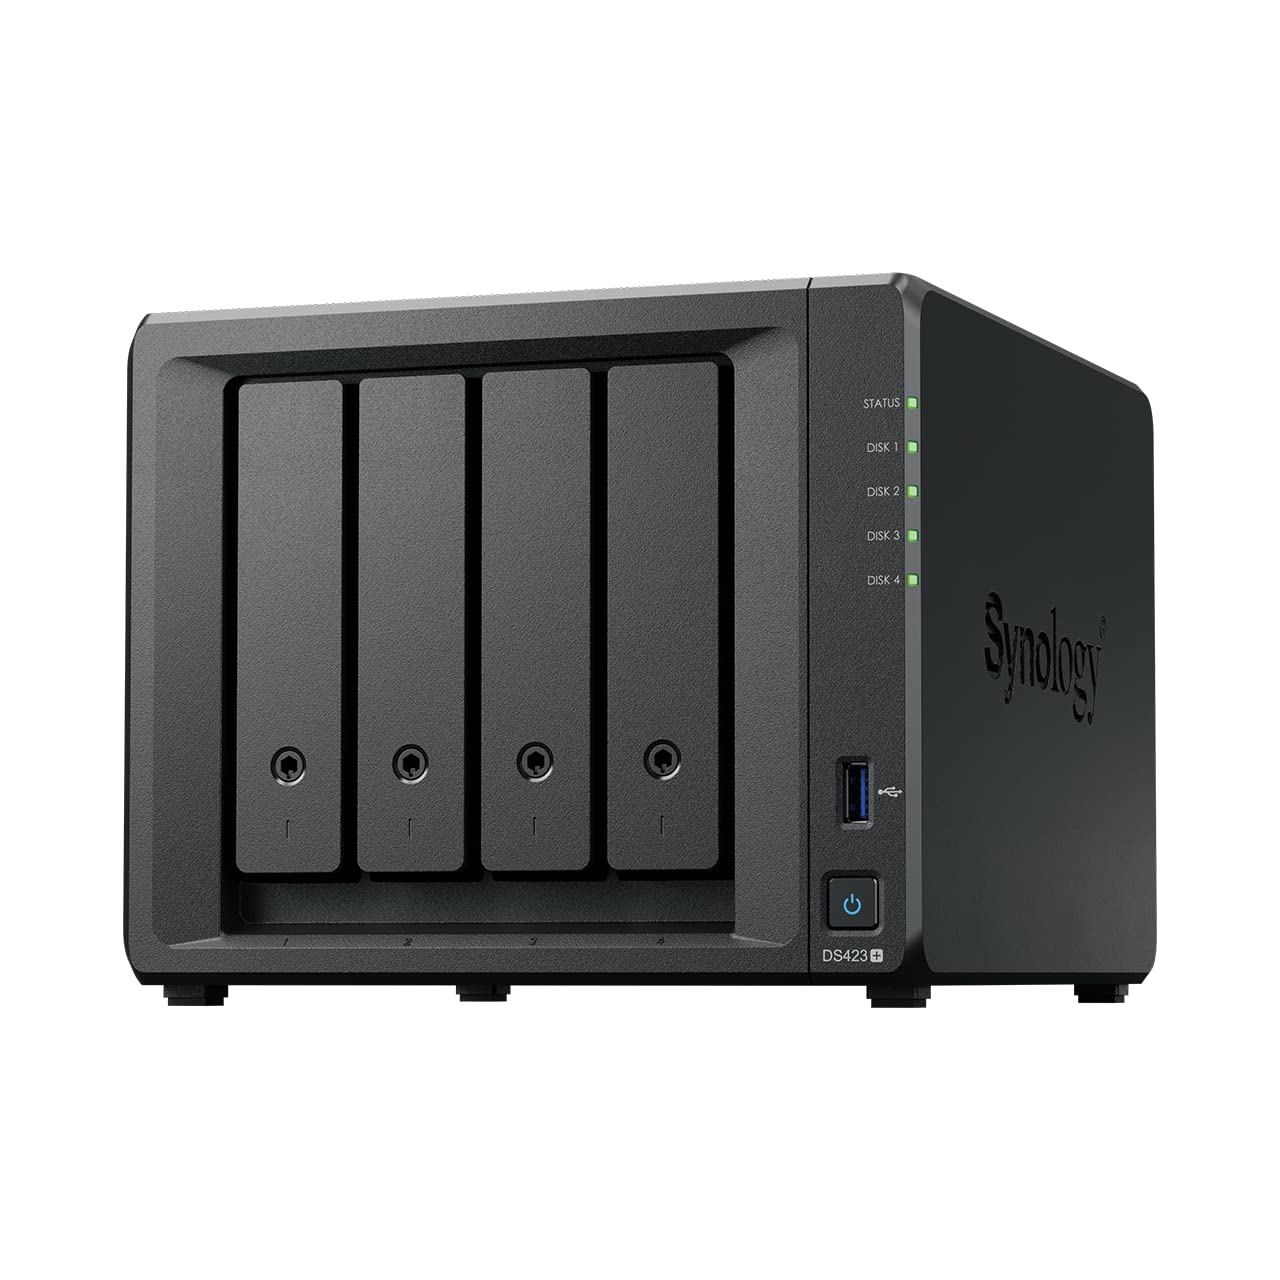 Synology DiskStation DS423+ 4-Bay NAS $369.99